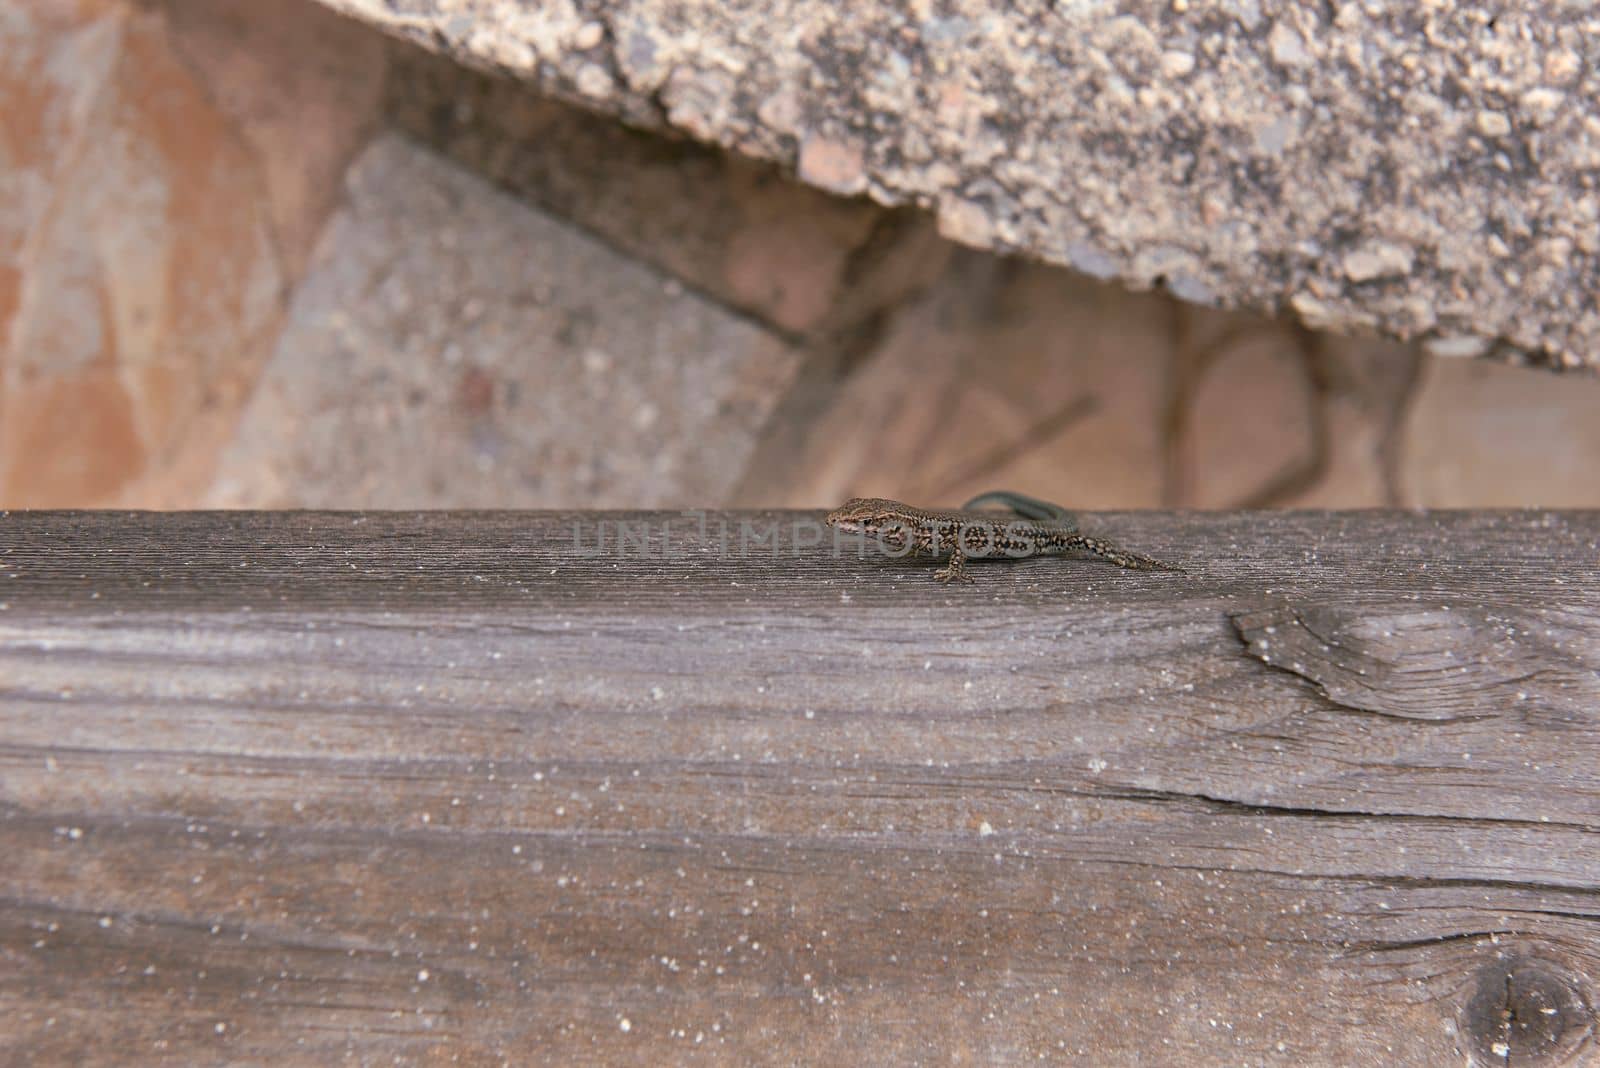 A small lizard on a wooden trunk by raul_ruiz